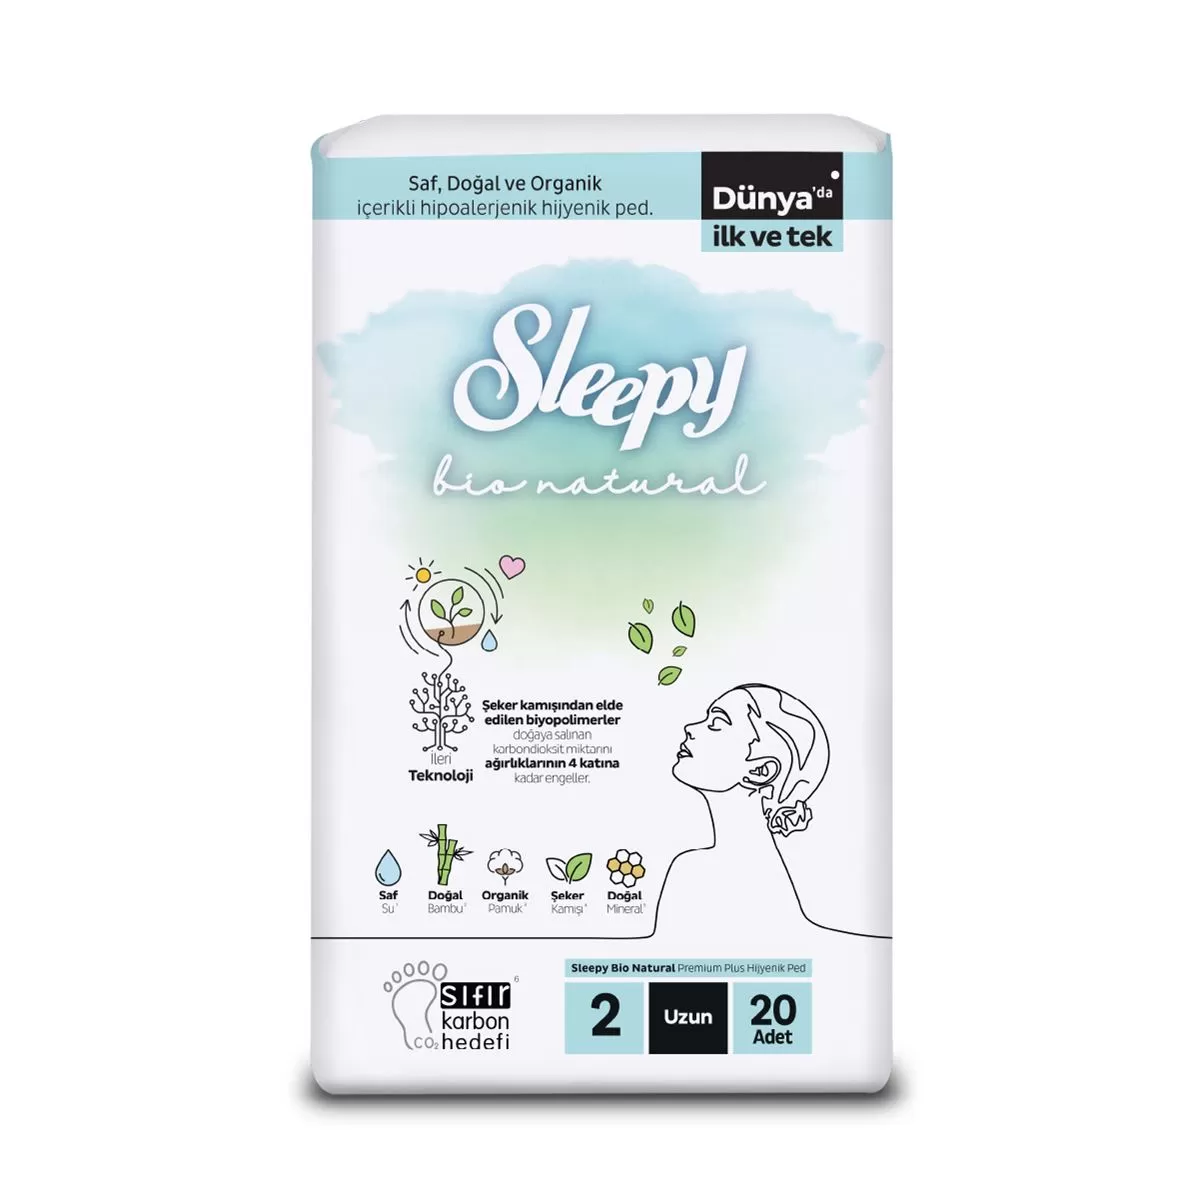 Sleepy Bio Natural Premium Plus Hijyenik Ped Uzun 20x2 40 Adet Ped